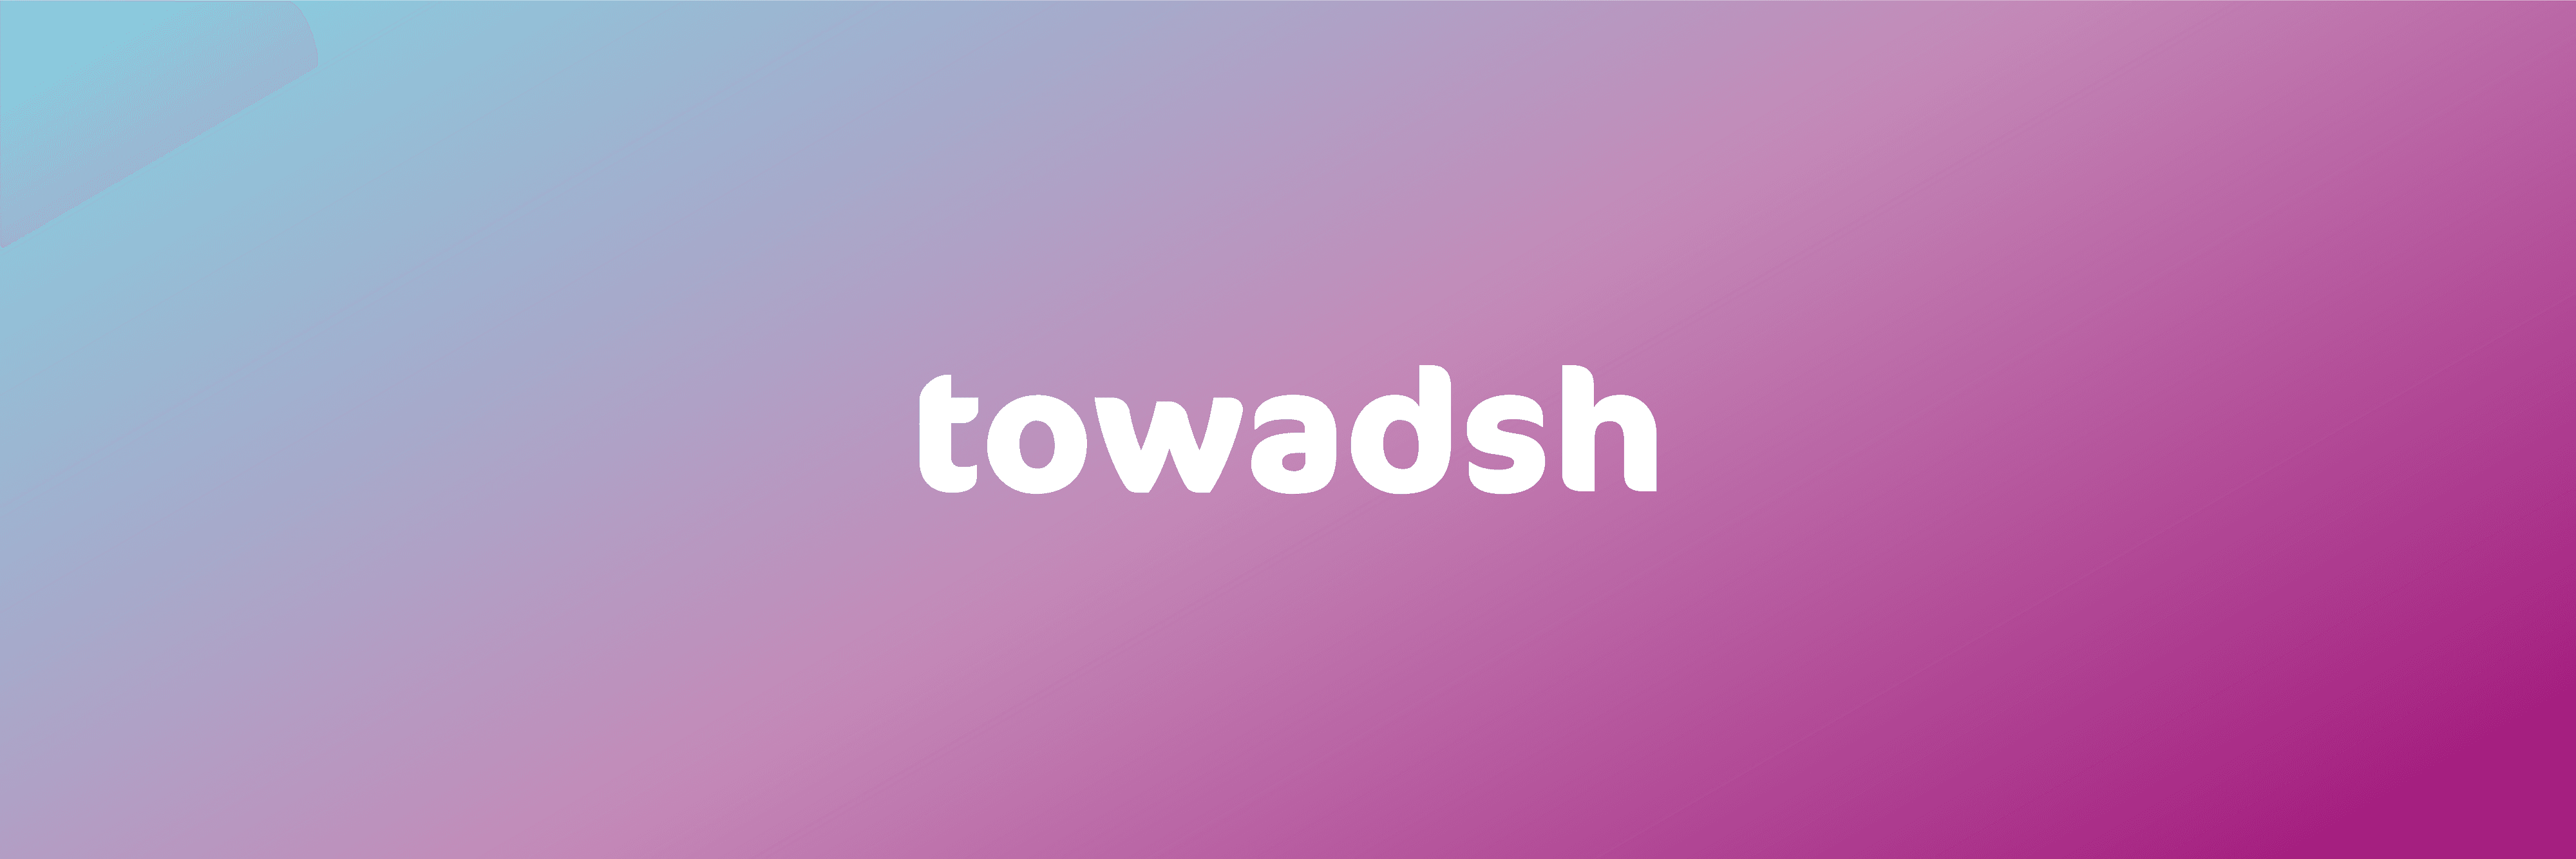 towadshStudios banner